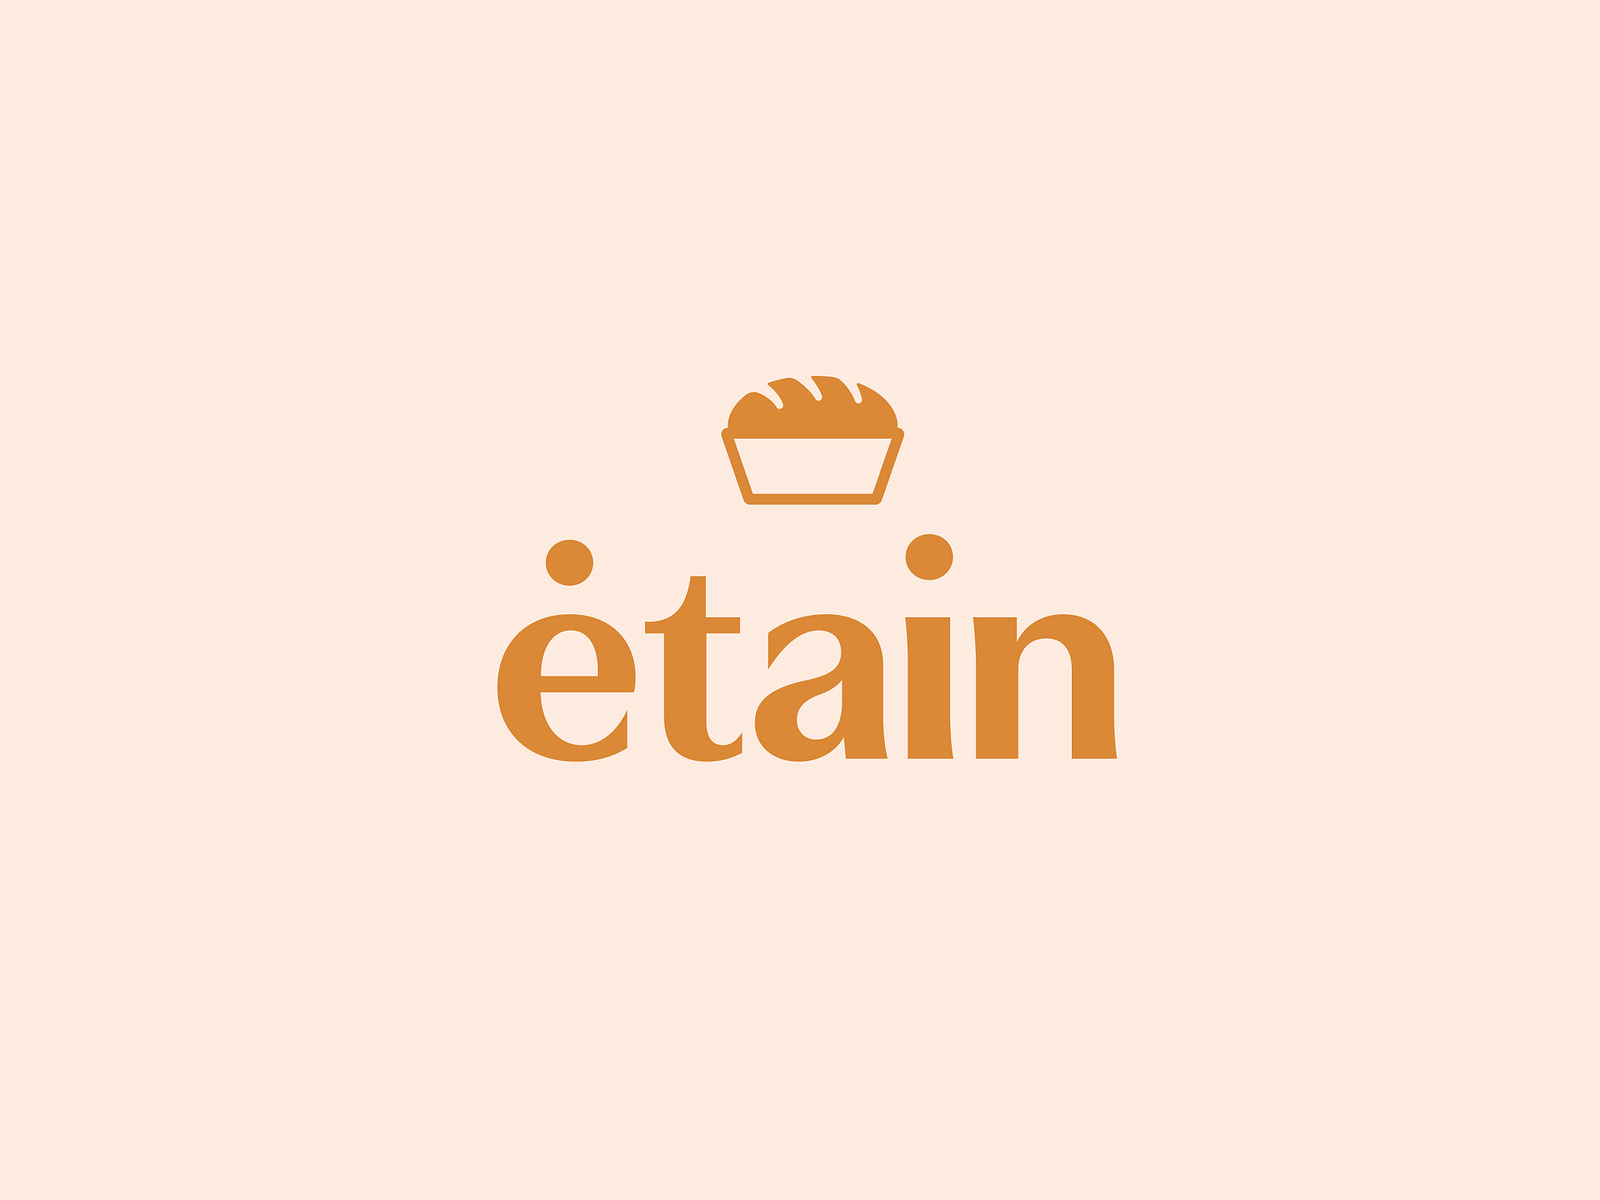 Etain/ logo by Chris Moffett on Dribbble